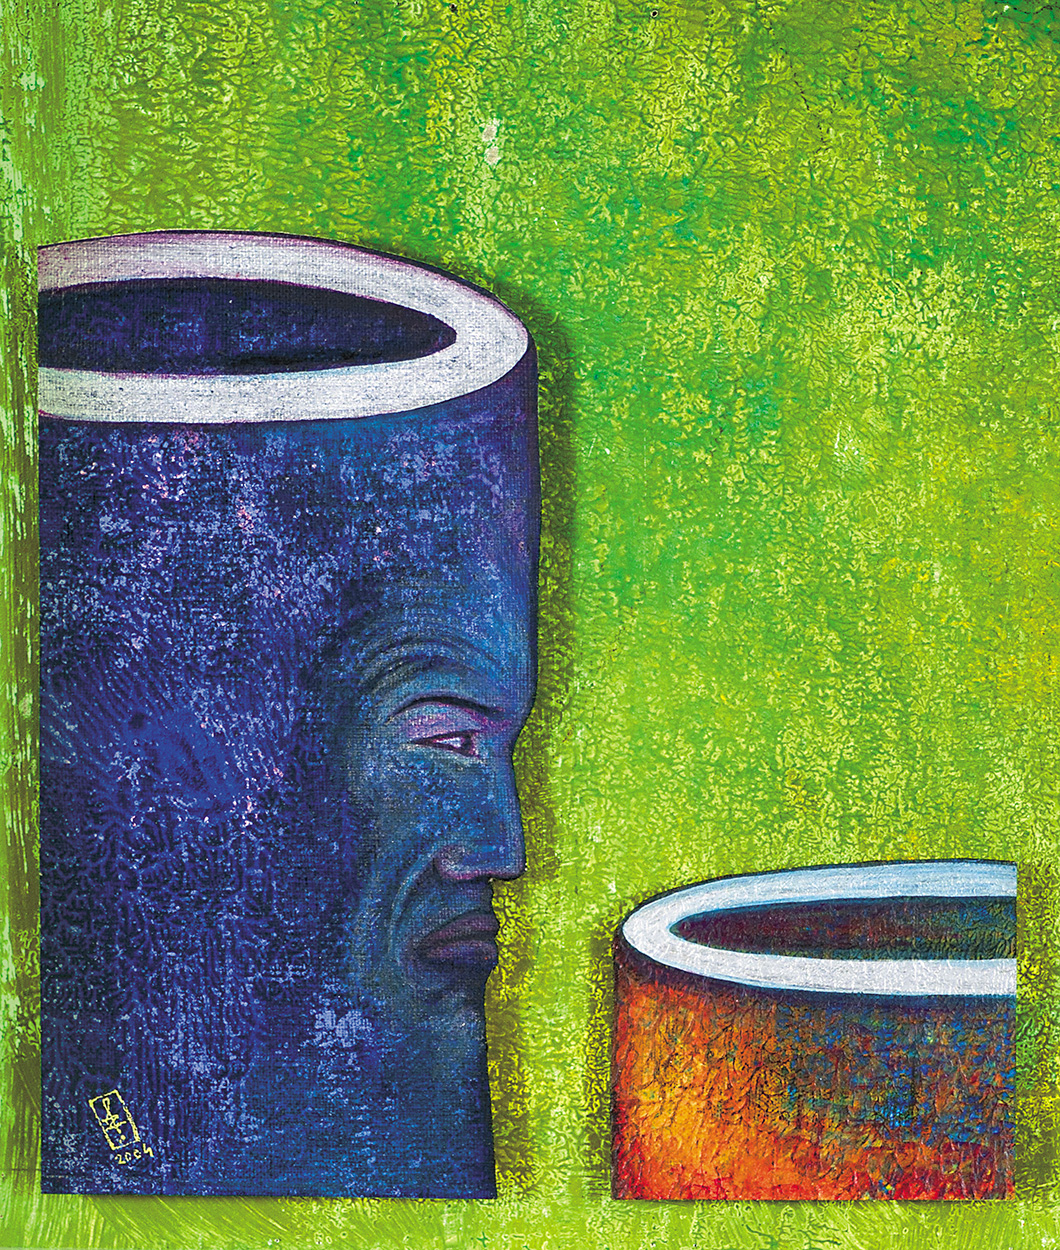 Szurcsik József (1959-) Barrel of Desire, 2004